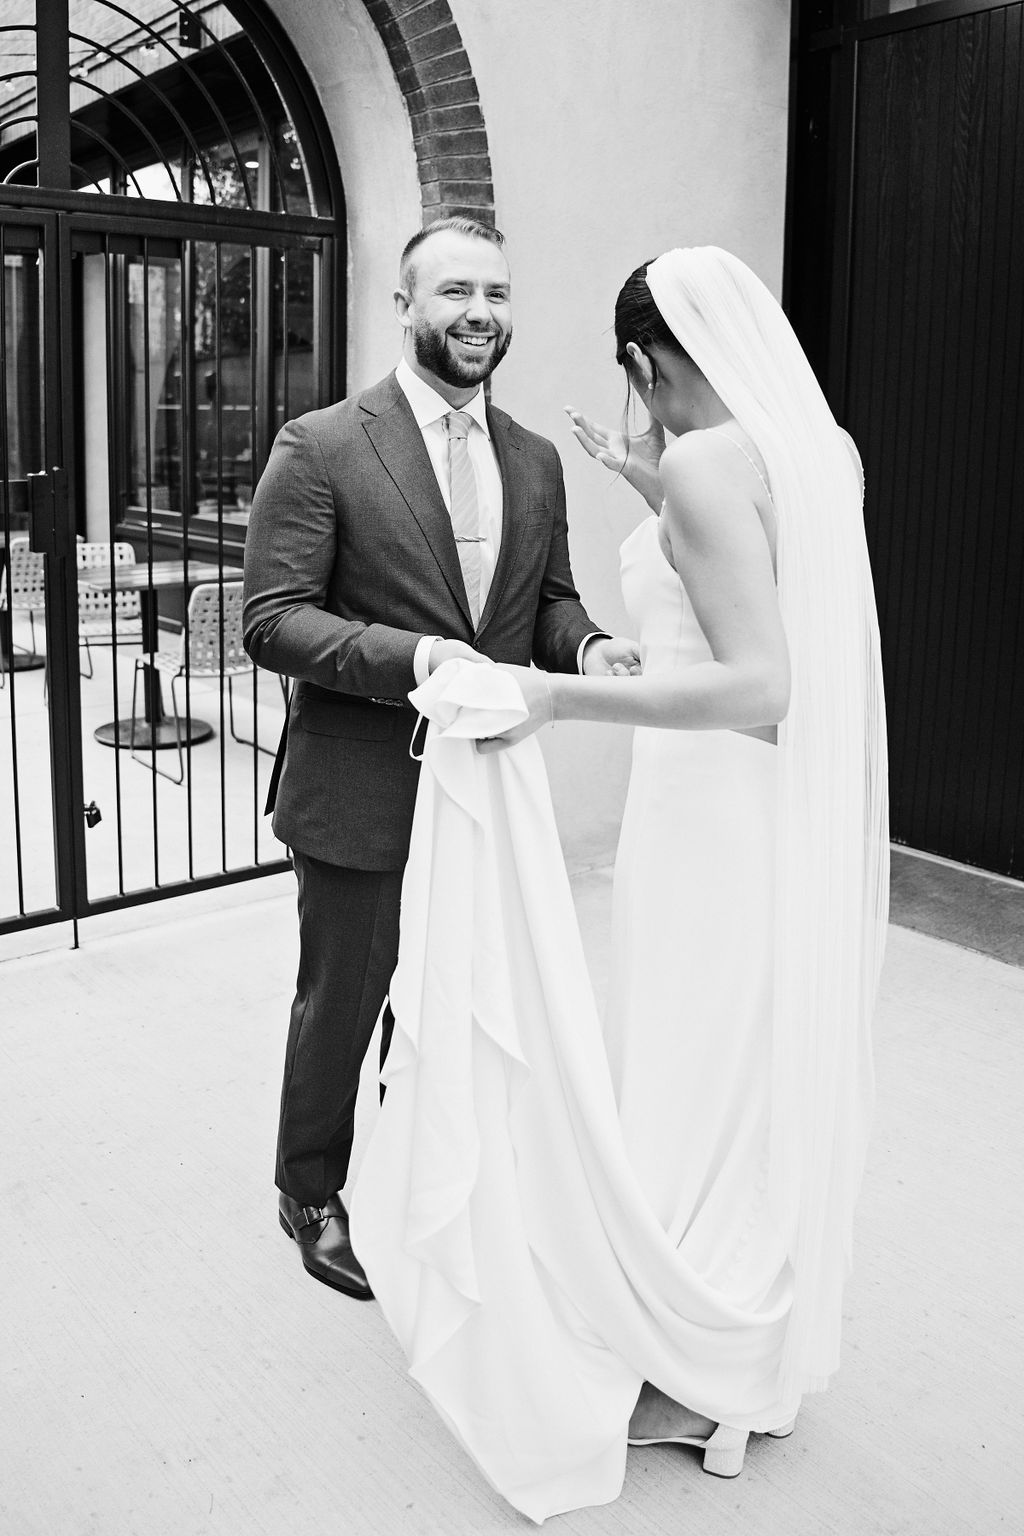 wedding vows, emotion capturing wedding photographs, black and white wedding portrait